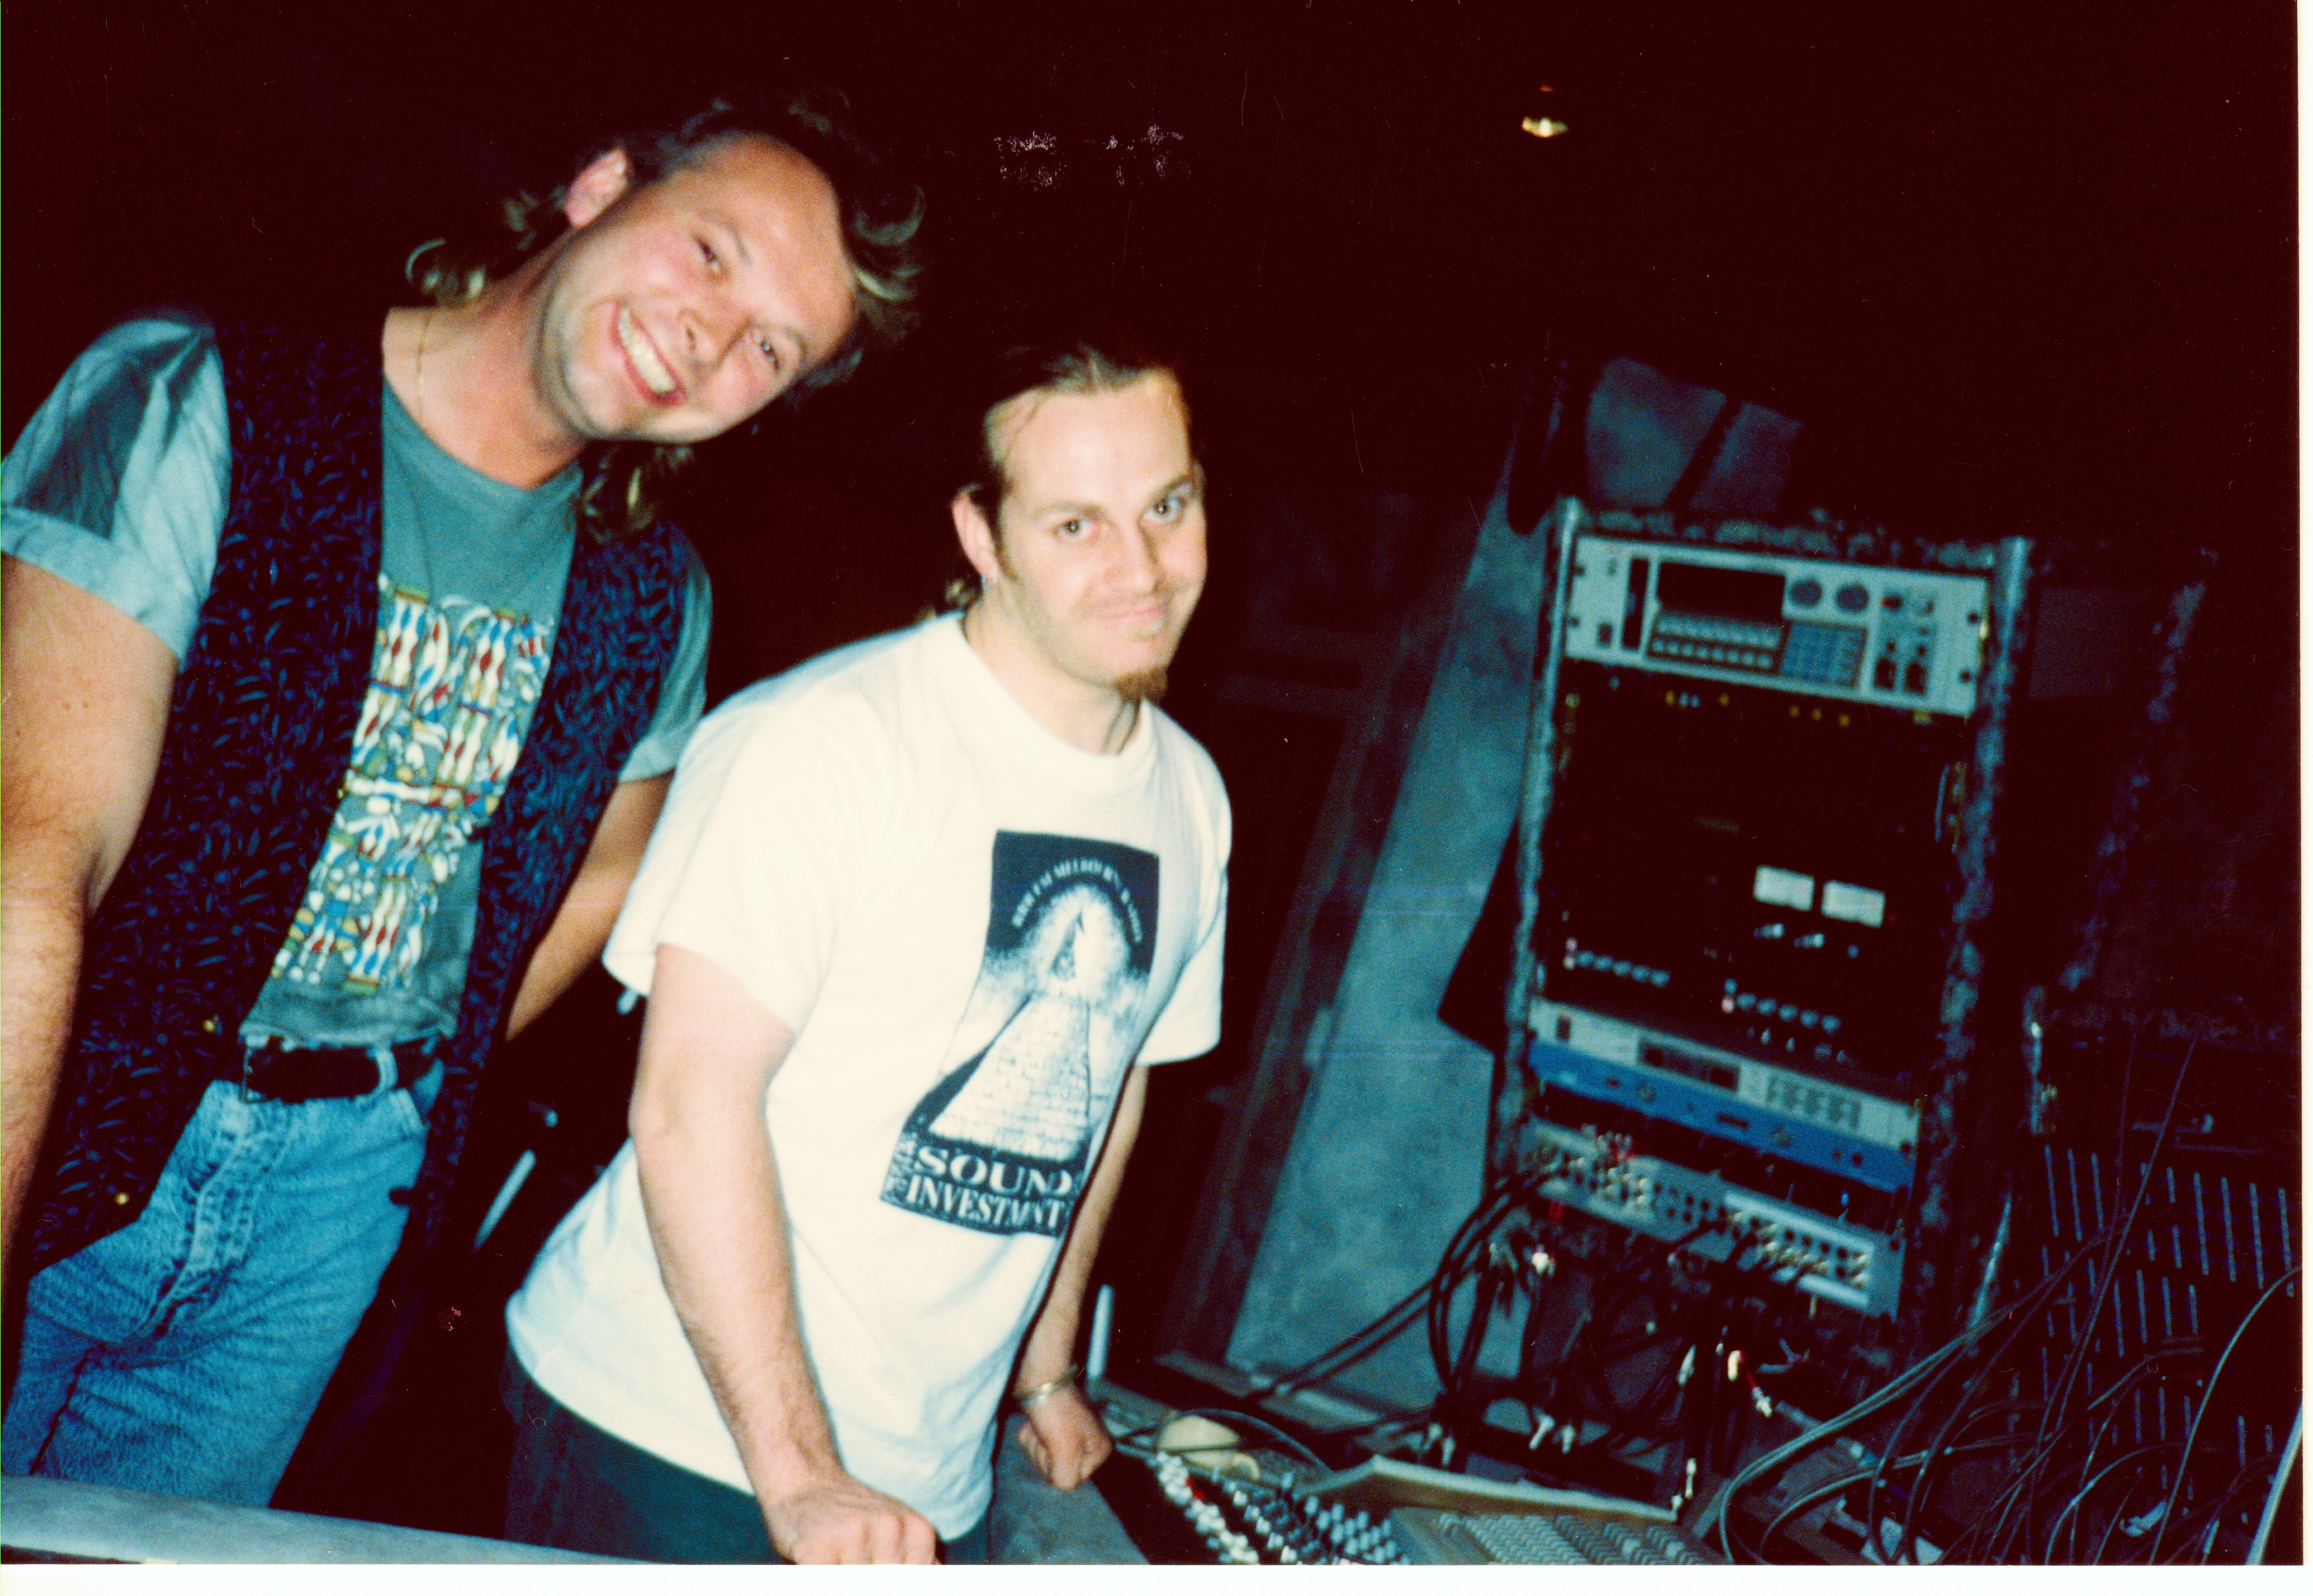 Dave Long 'Sahara' with sound engineer Andrew in Metropolis Studios Melbourne - mid nineties